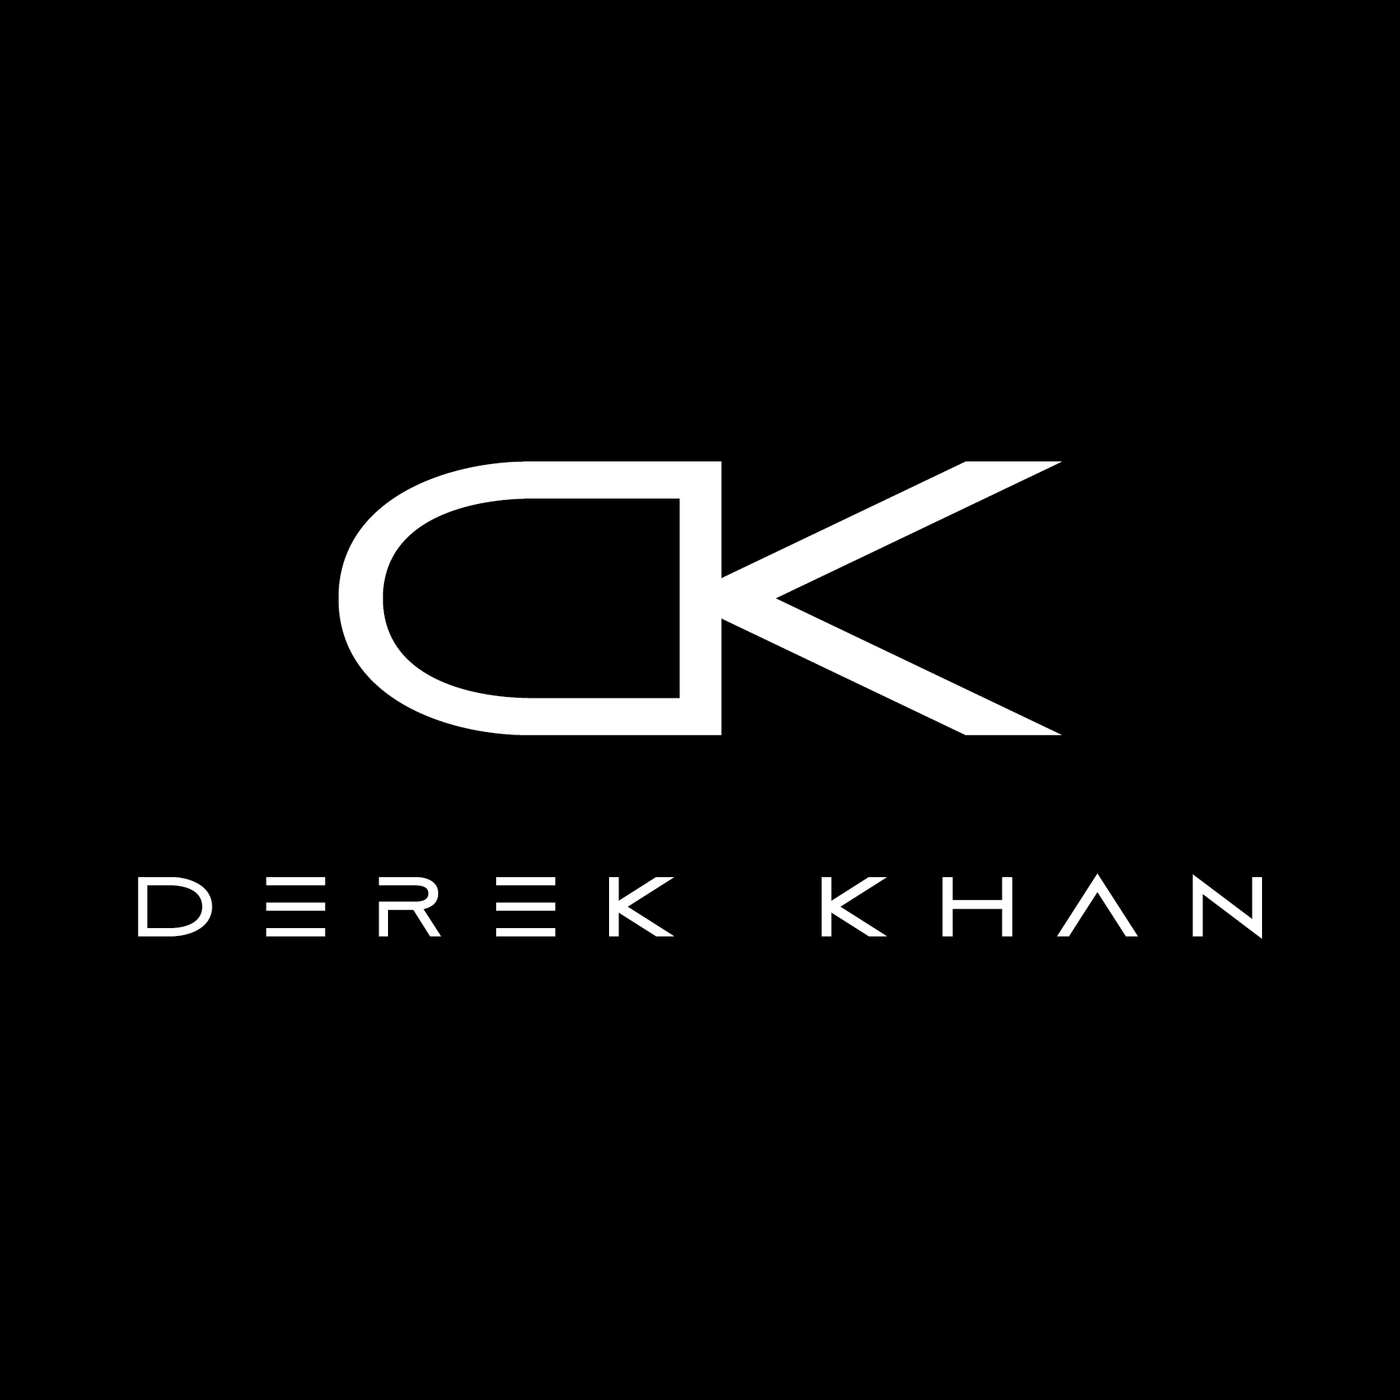 Derek Logo - Derek Khan Logo/Website Design by Ping-Yi (Benny) Lu at Coroflot.com